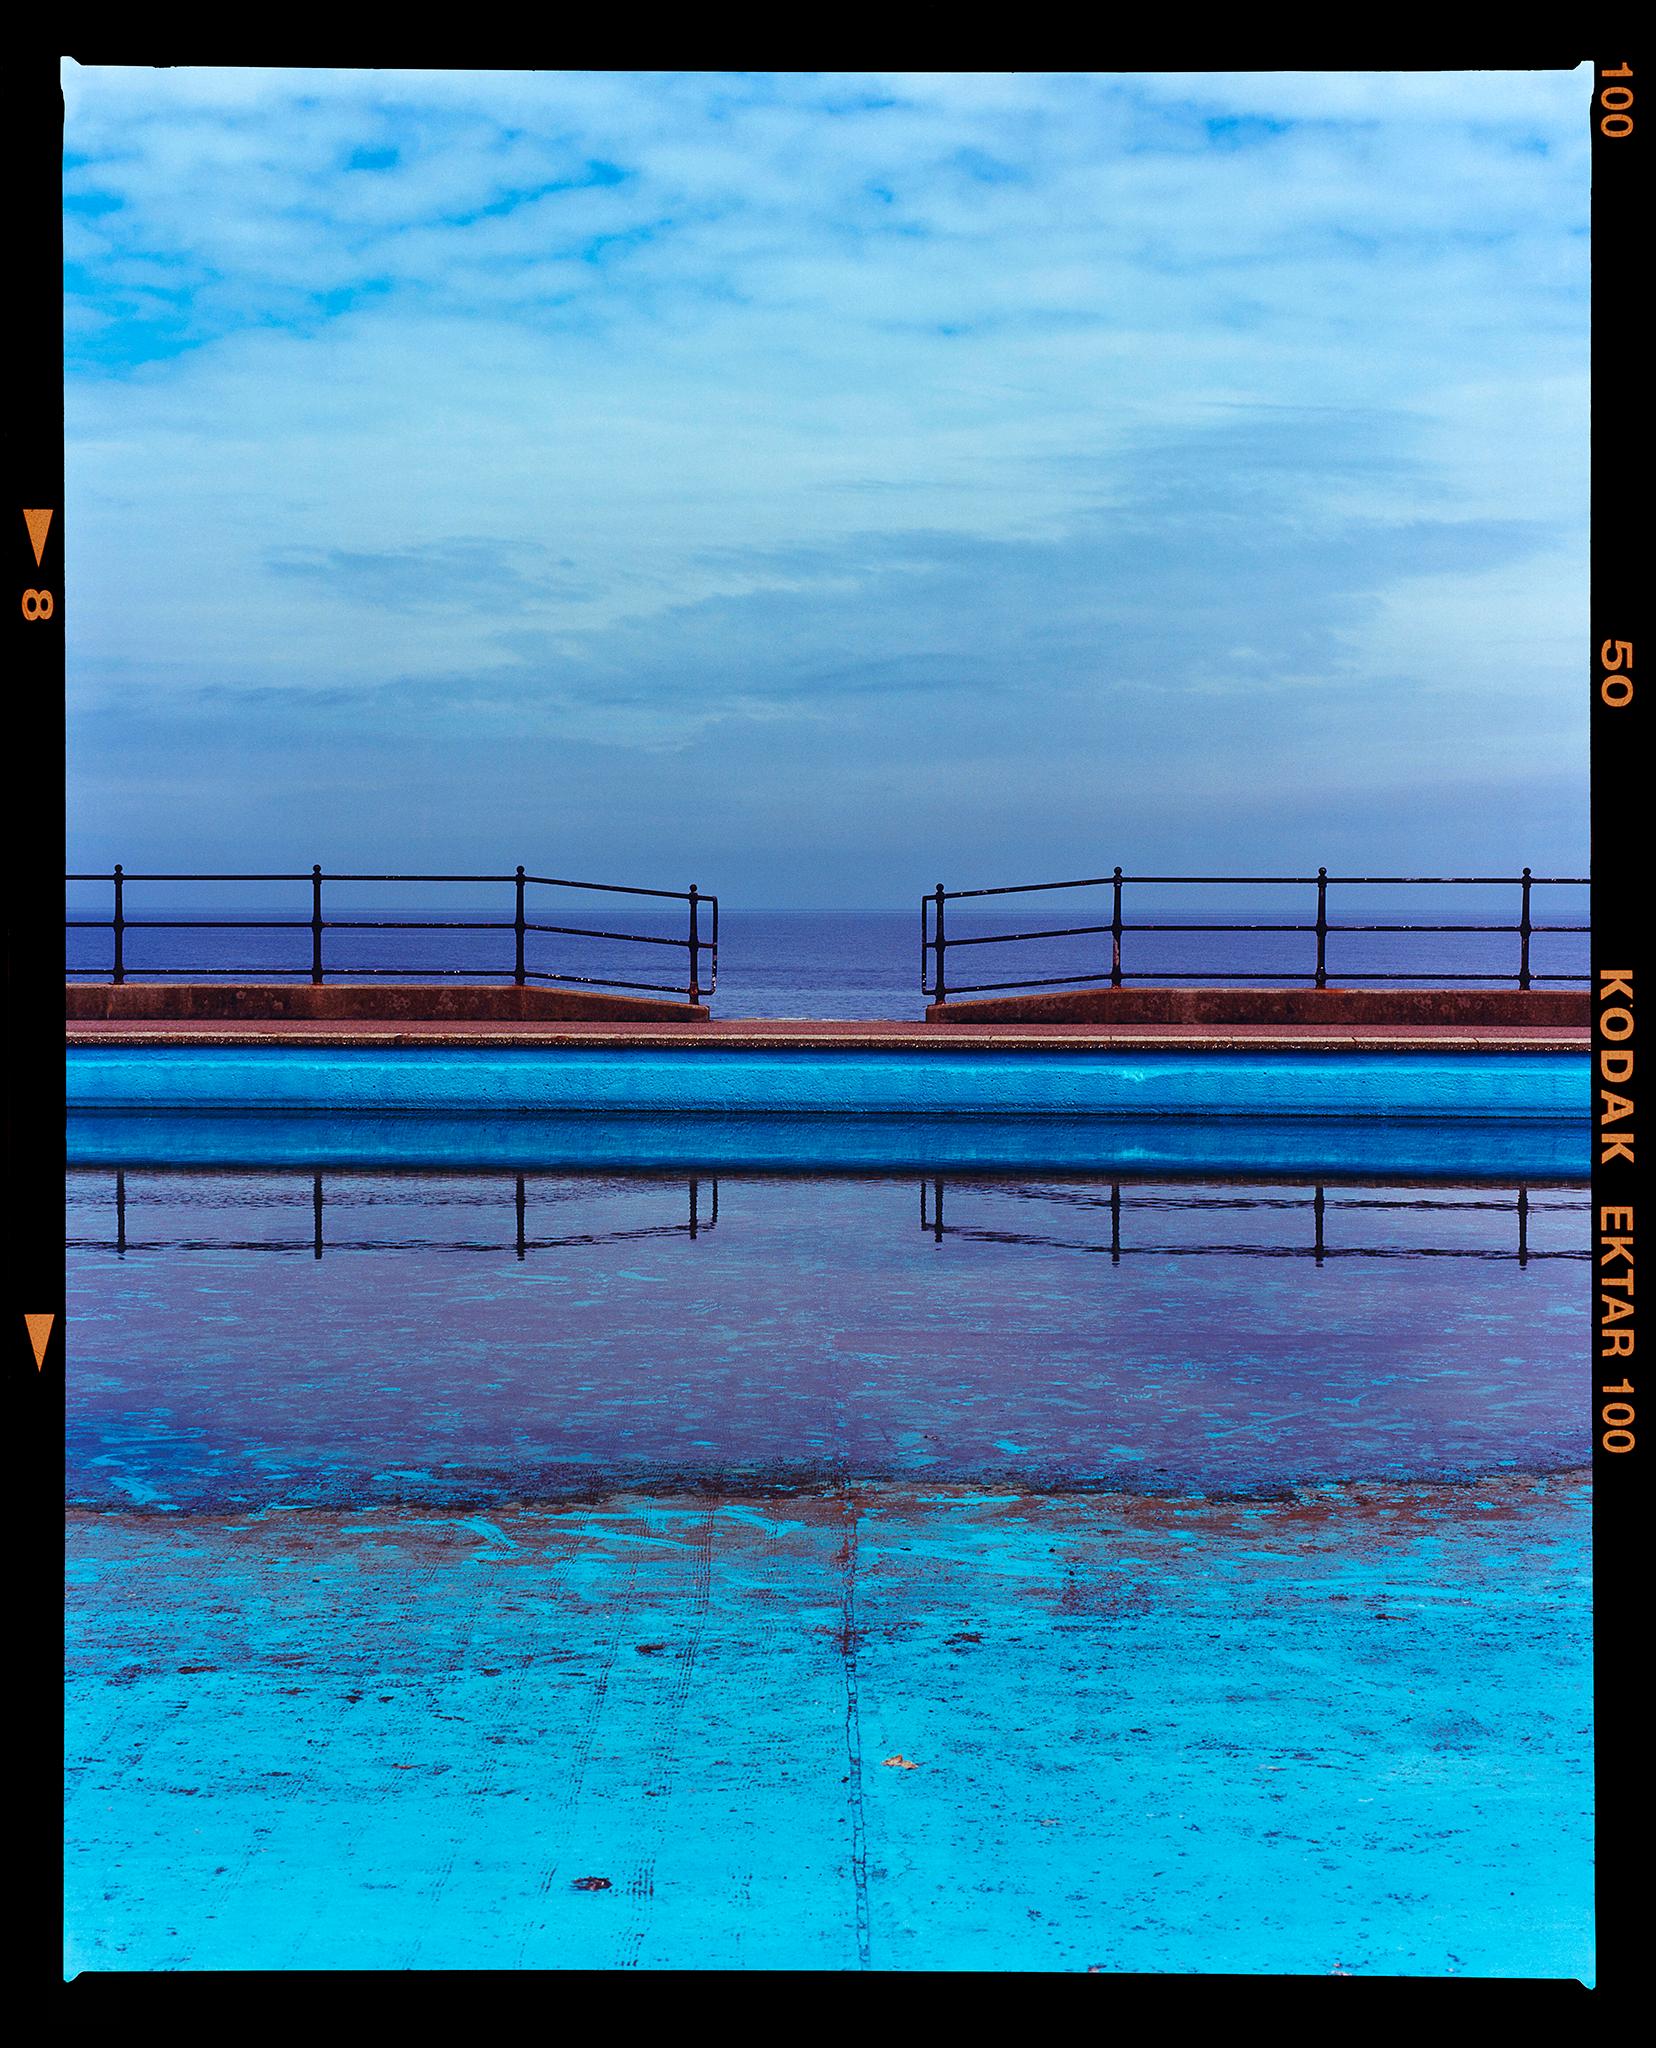 Richard Heeps Color Photograph - Craig y Don Pool, Llandudno Beach, Wales - Blue British Swimming Pool Sea Photo